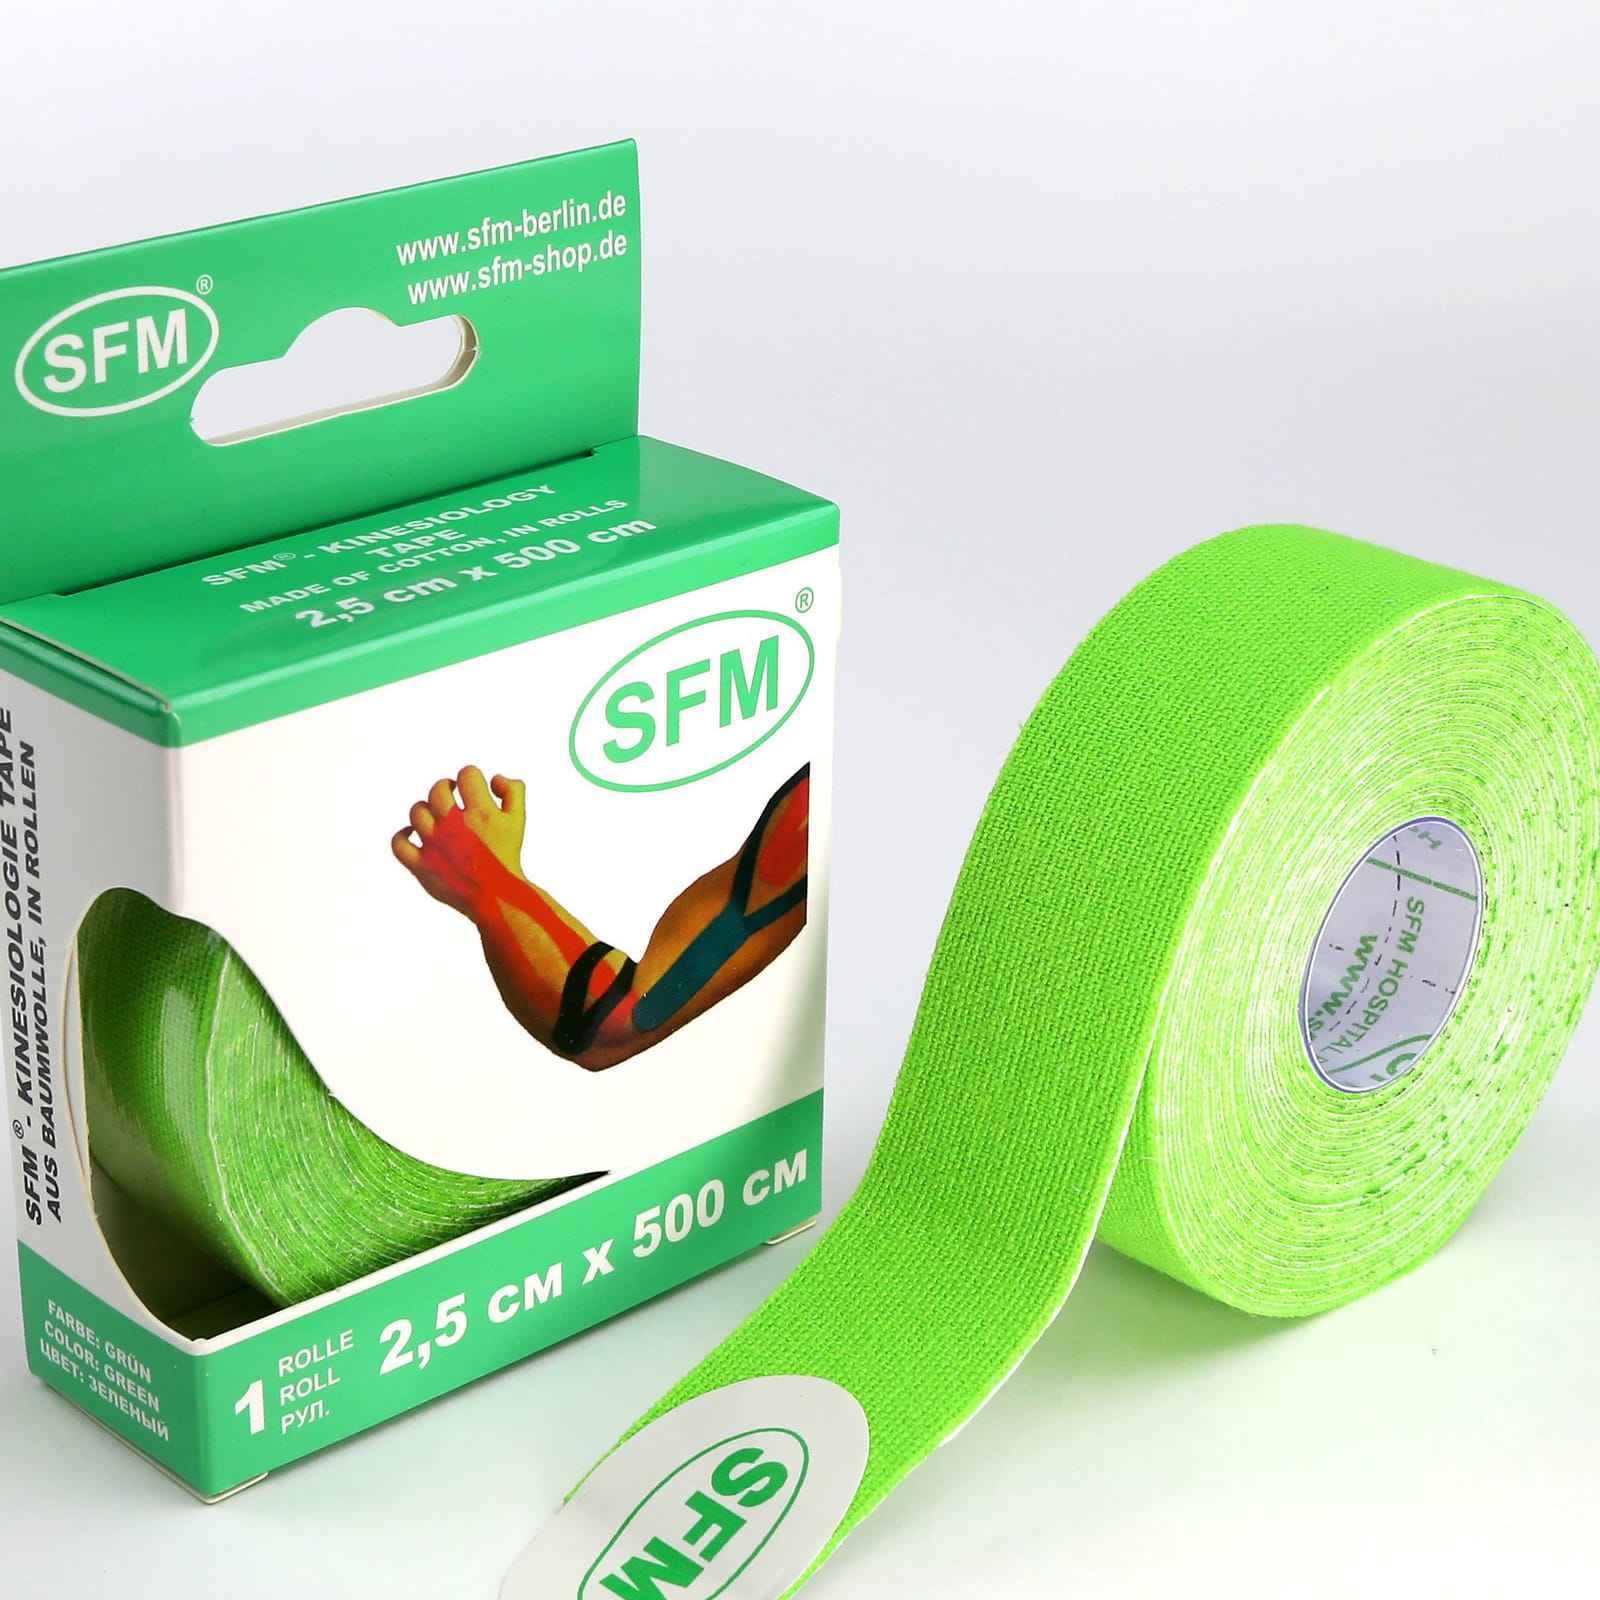 Кинезиотейп SFM Hospital Products Plaster на хлопковой основе 2.5х500 см зеленого цвета в диспенсере - фото 3